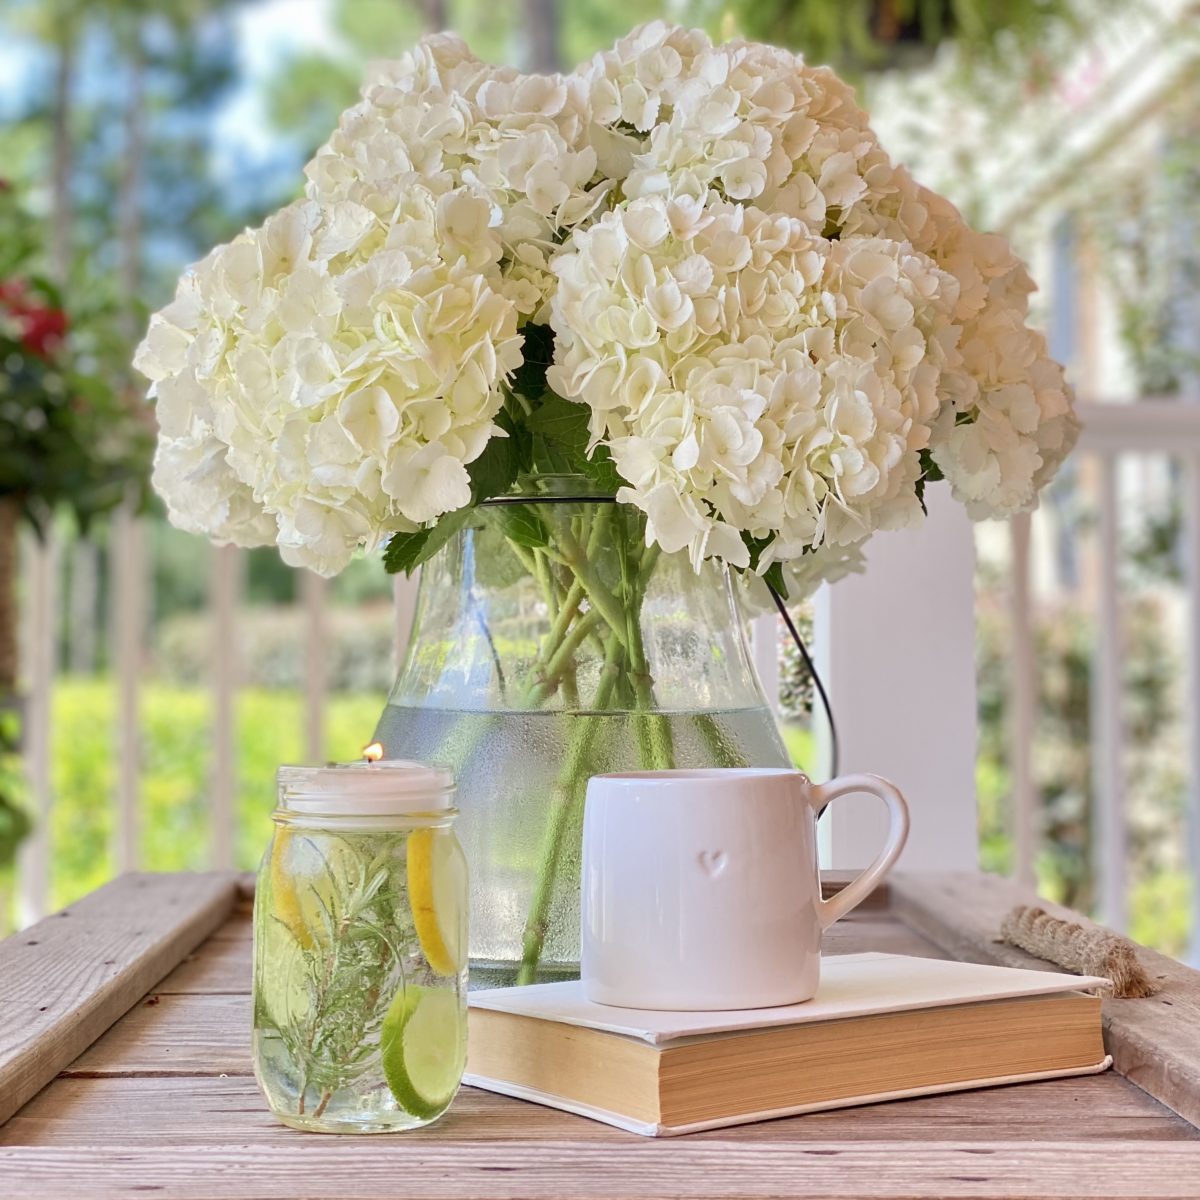 A DIY mason jar luminary on the porch coffee table with a book, a mug, and a vase of hydrangeas.